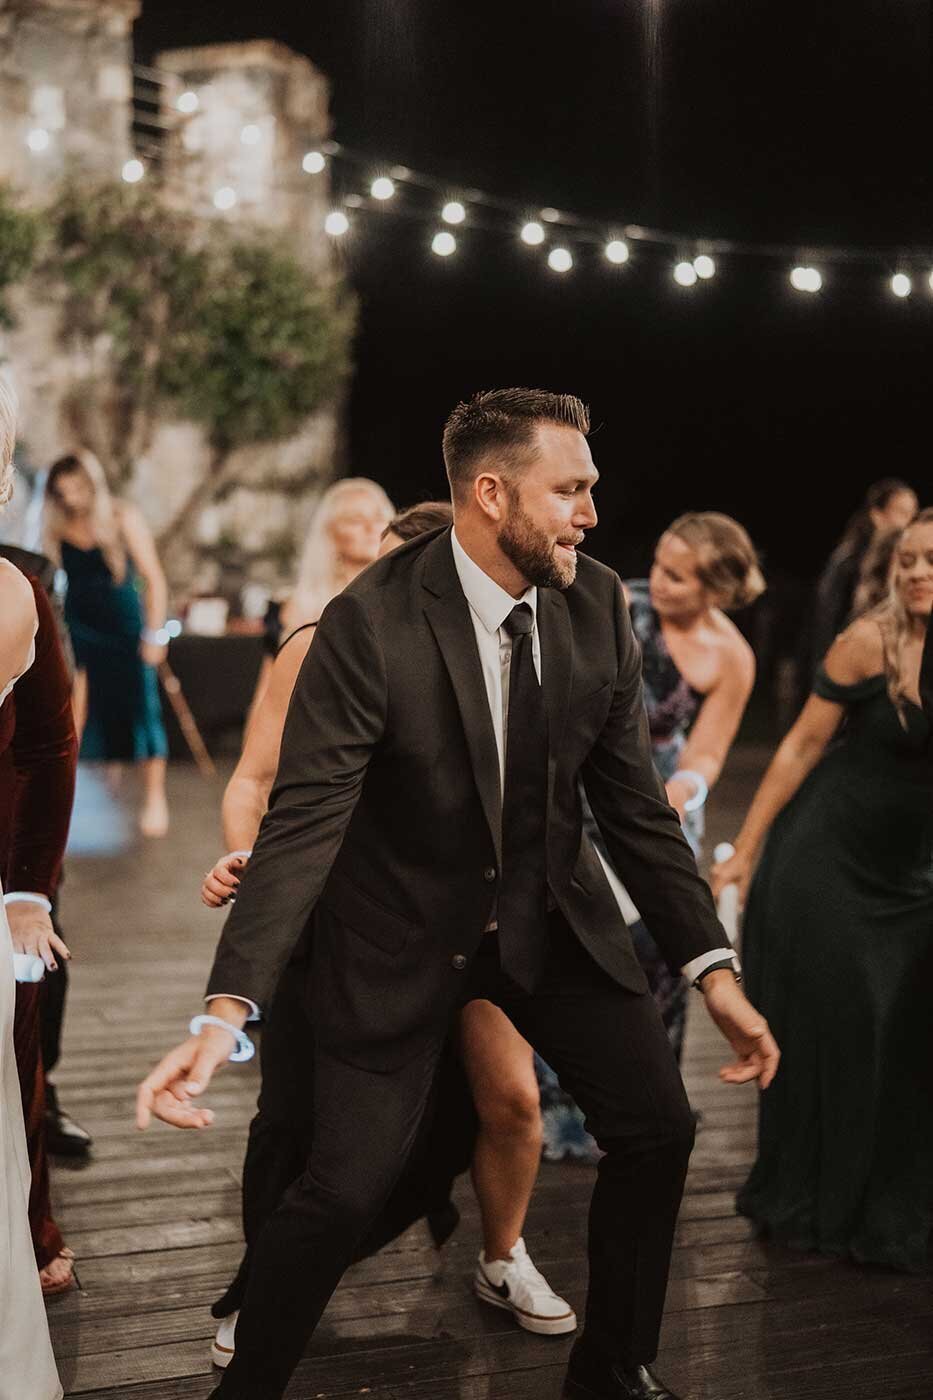 Wedding-guest-dancing-at-reception